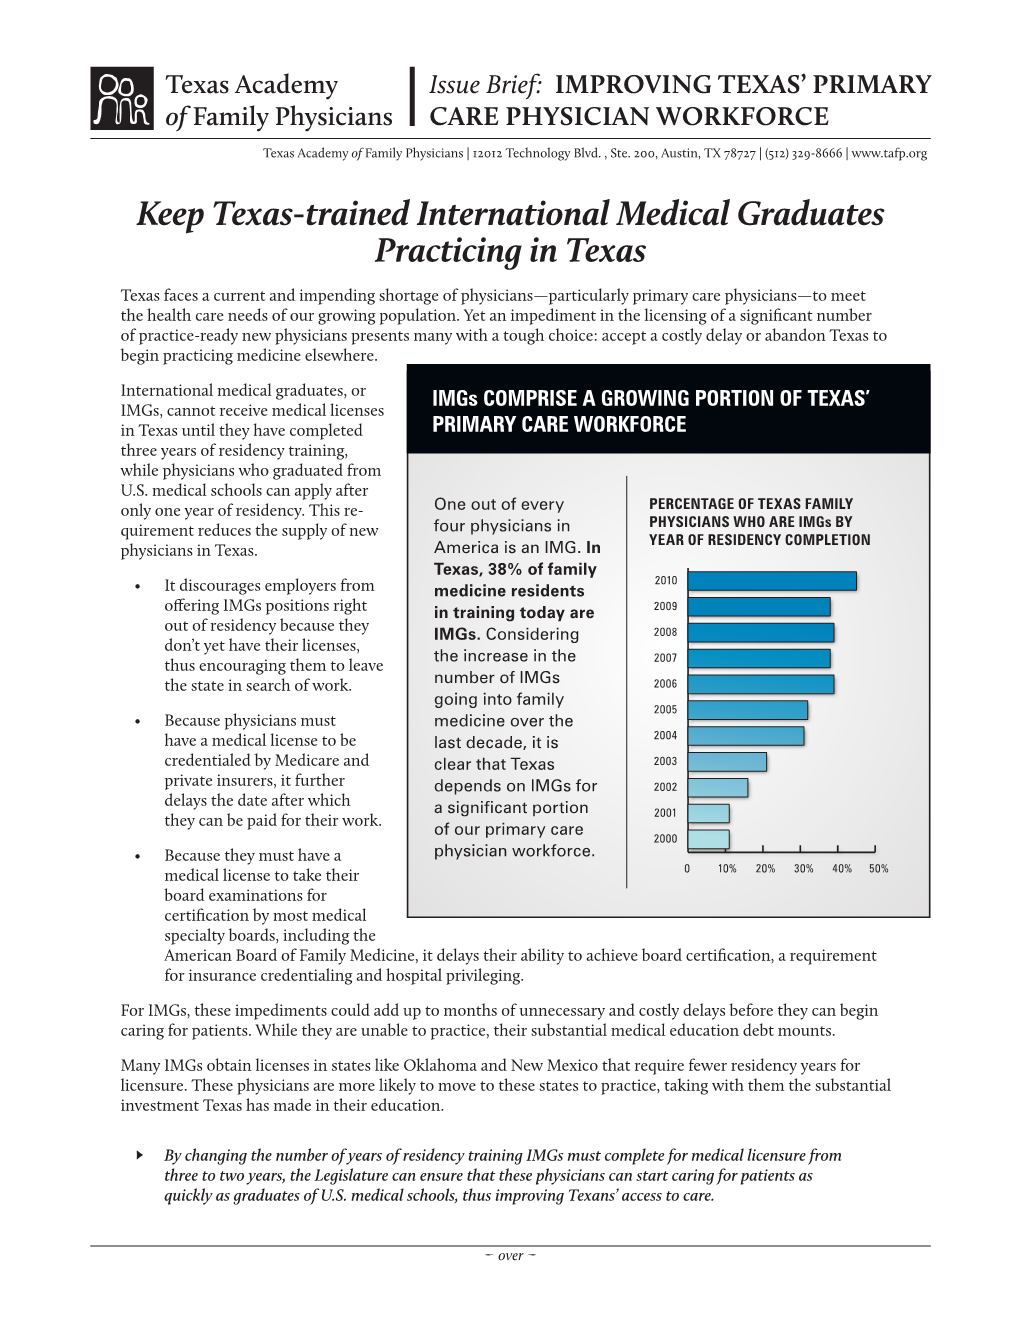 Keep Texas-Trained International Medical Graduates Practicing in Texas